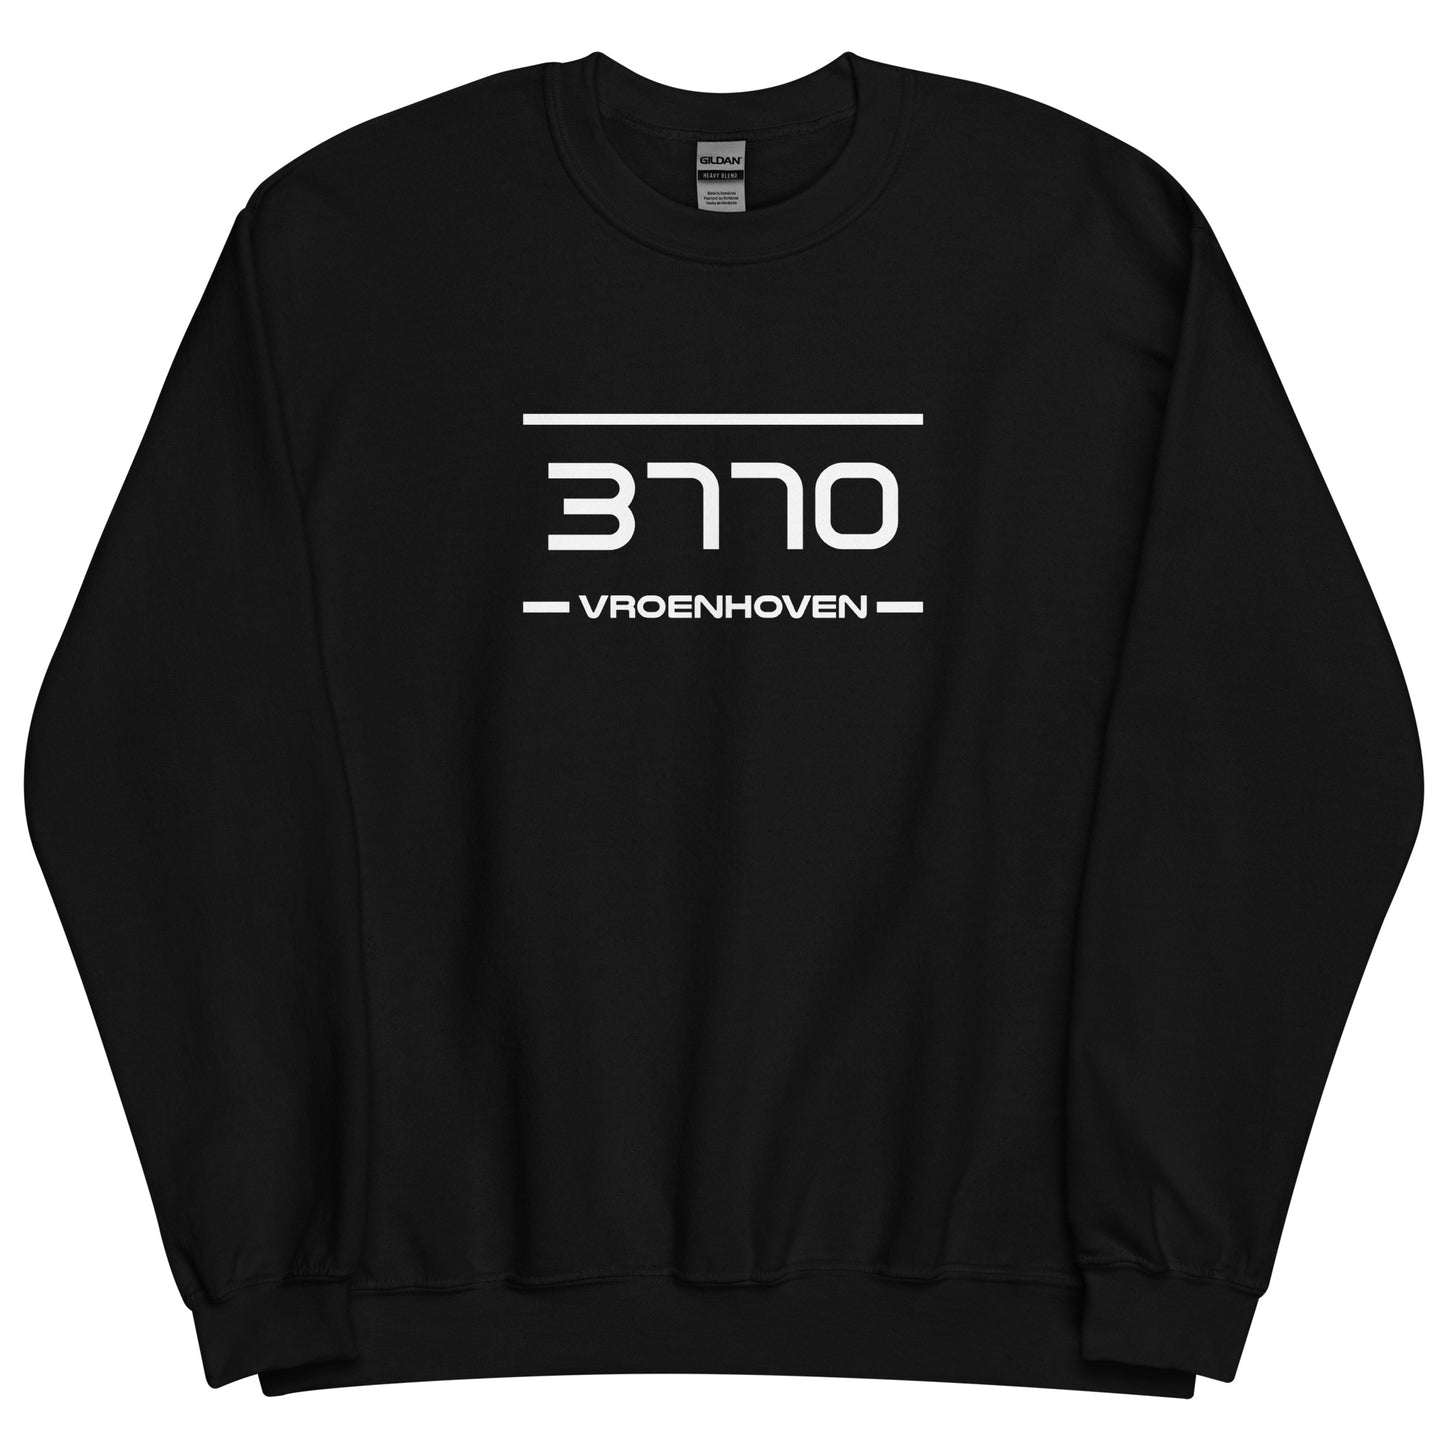 Sweater - 3770 - Vroenhoven (M/V)